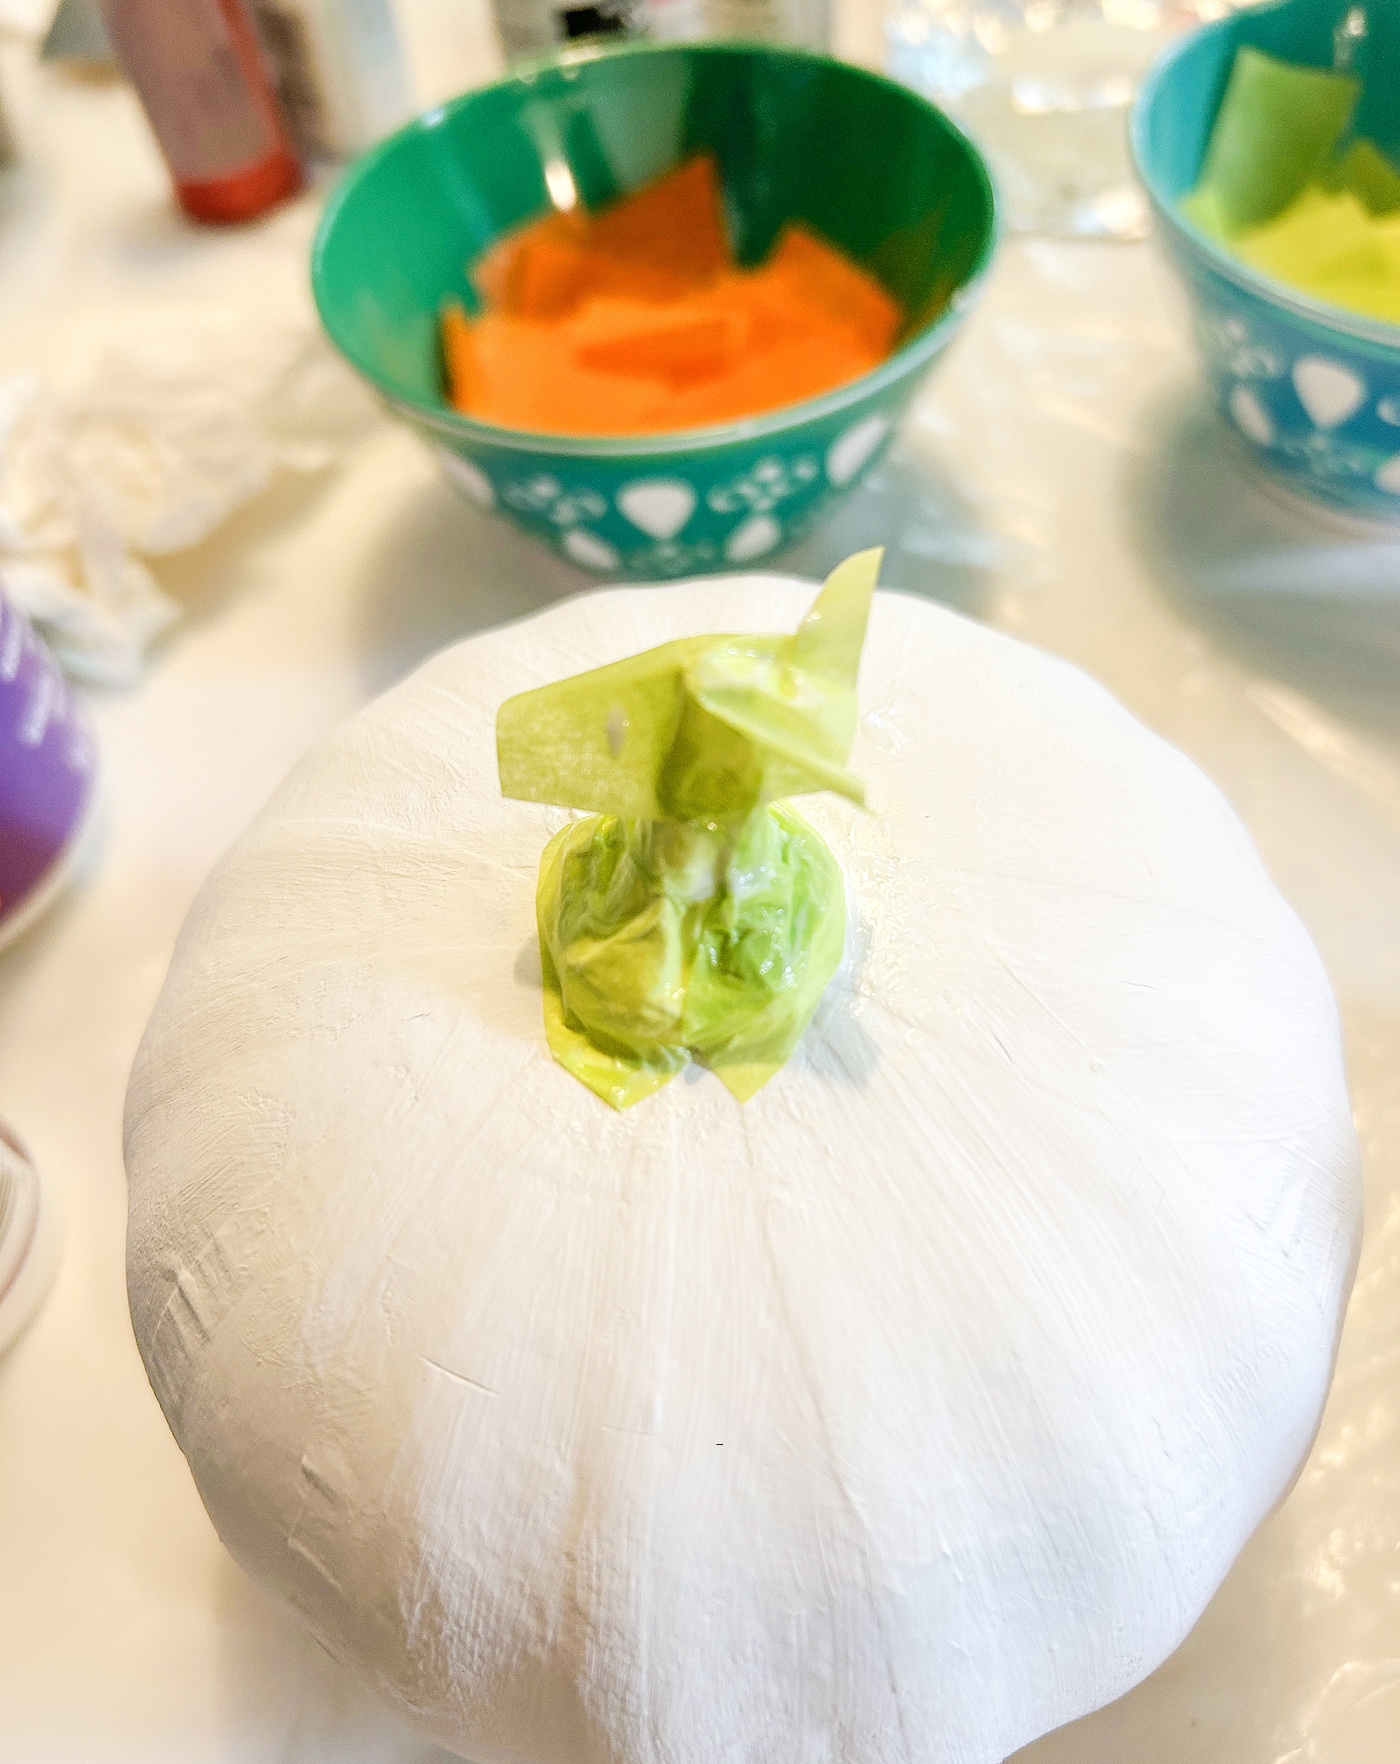 Covering the paper craft pumpkin stem in green tissue paper